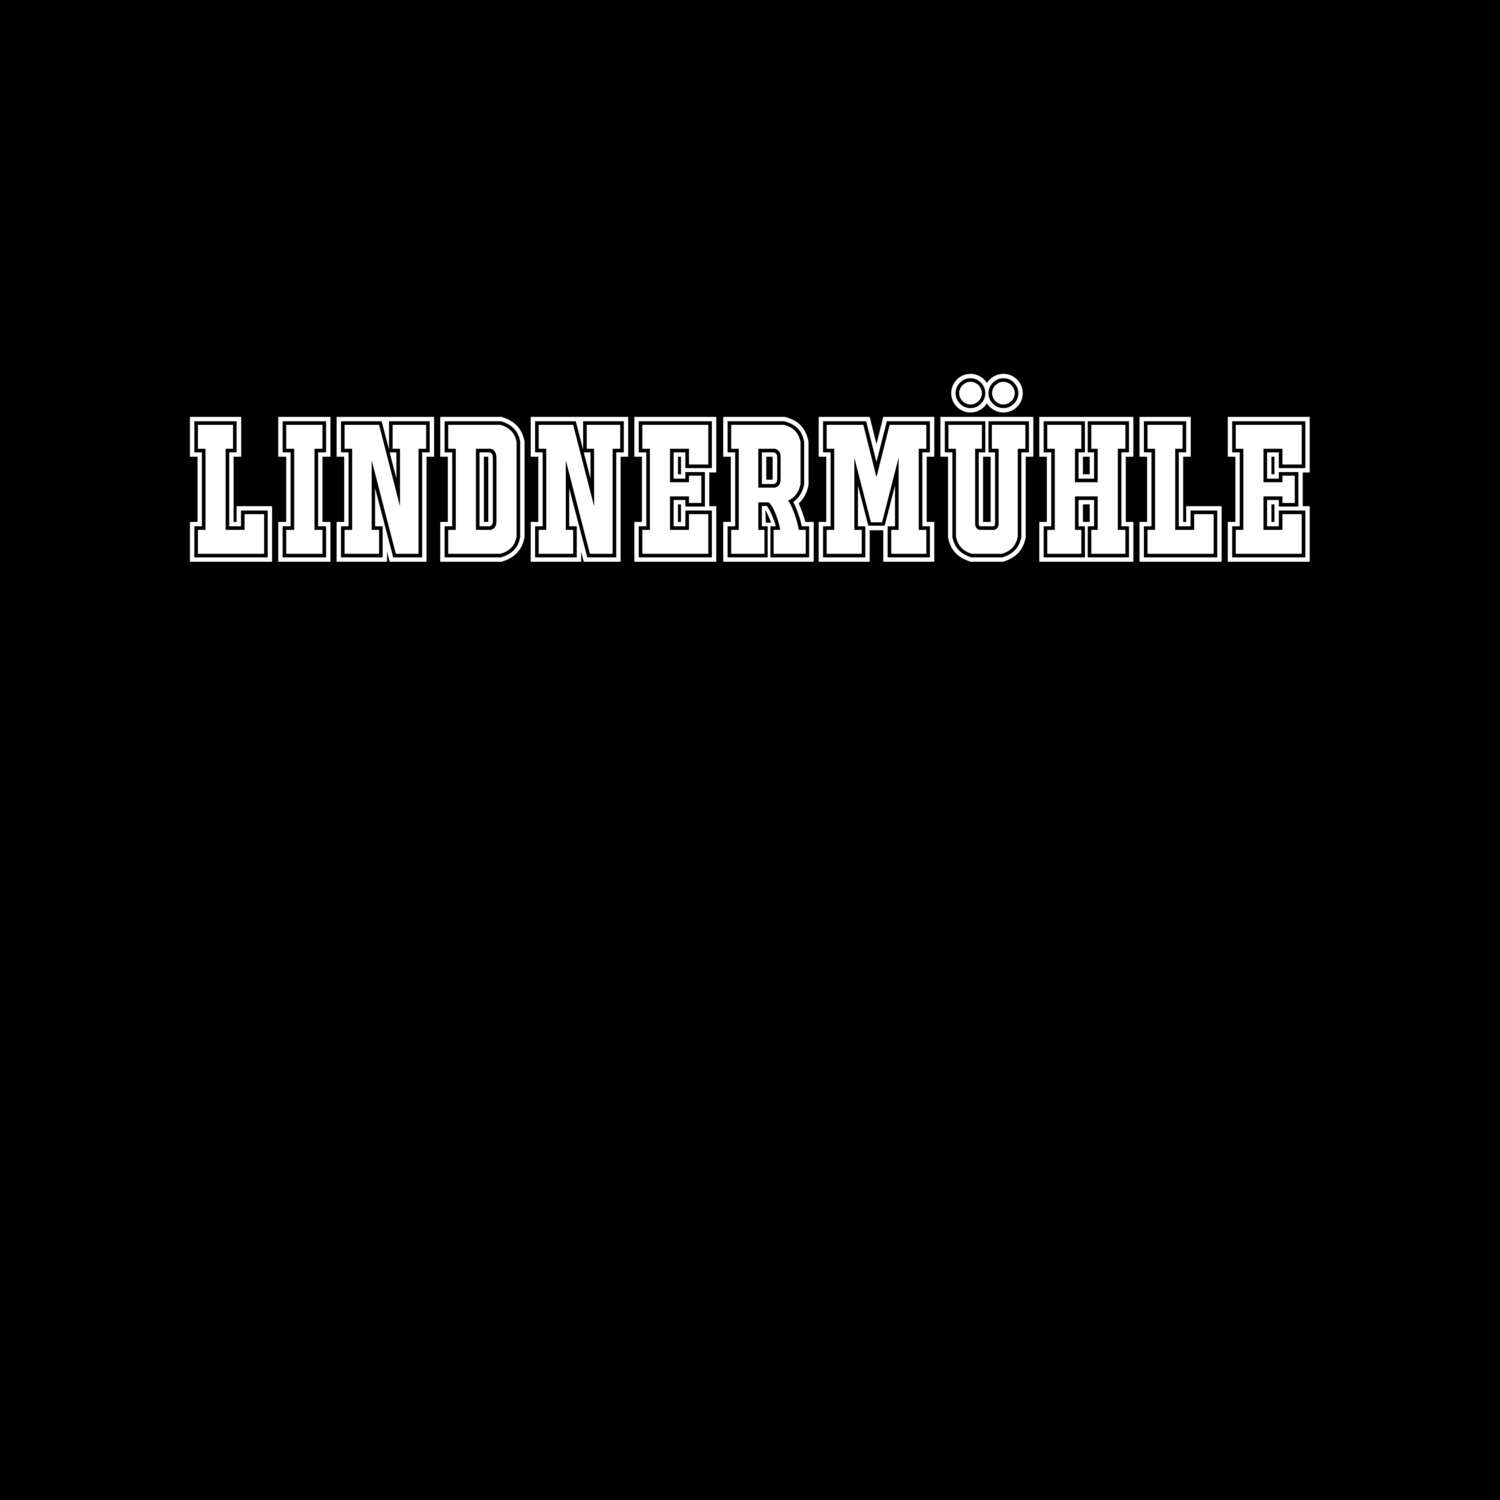 Lindnermühle T-Shirt »Classic«